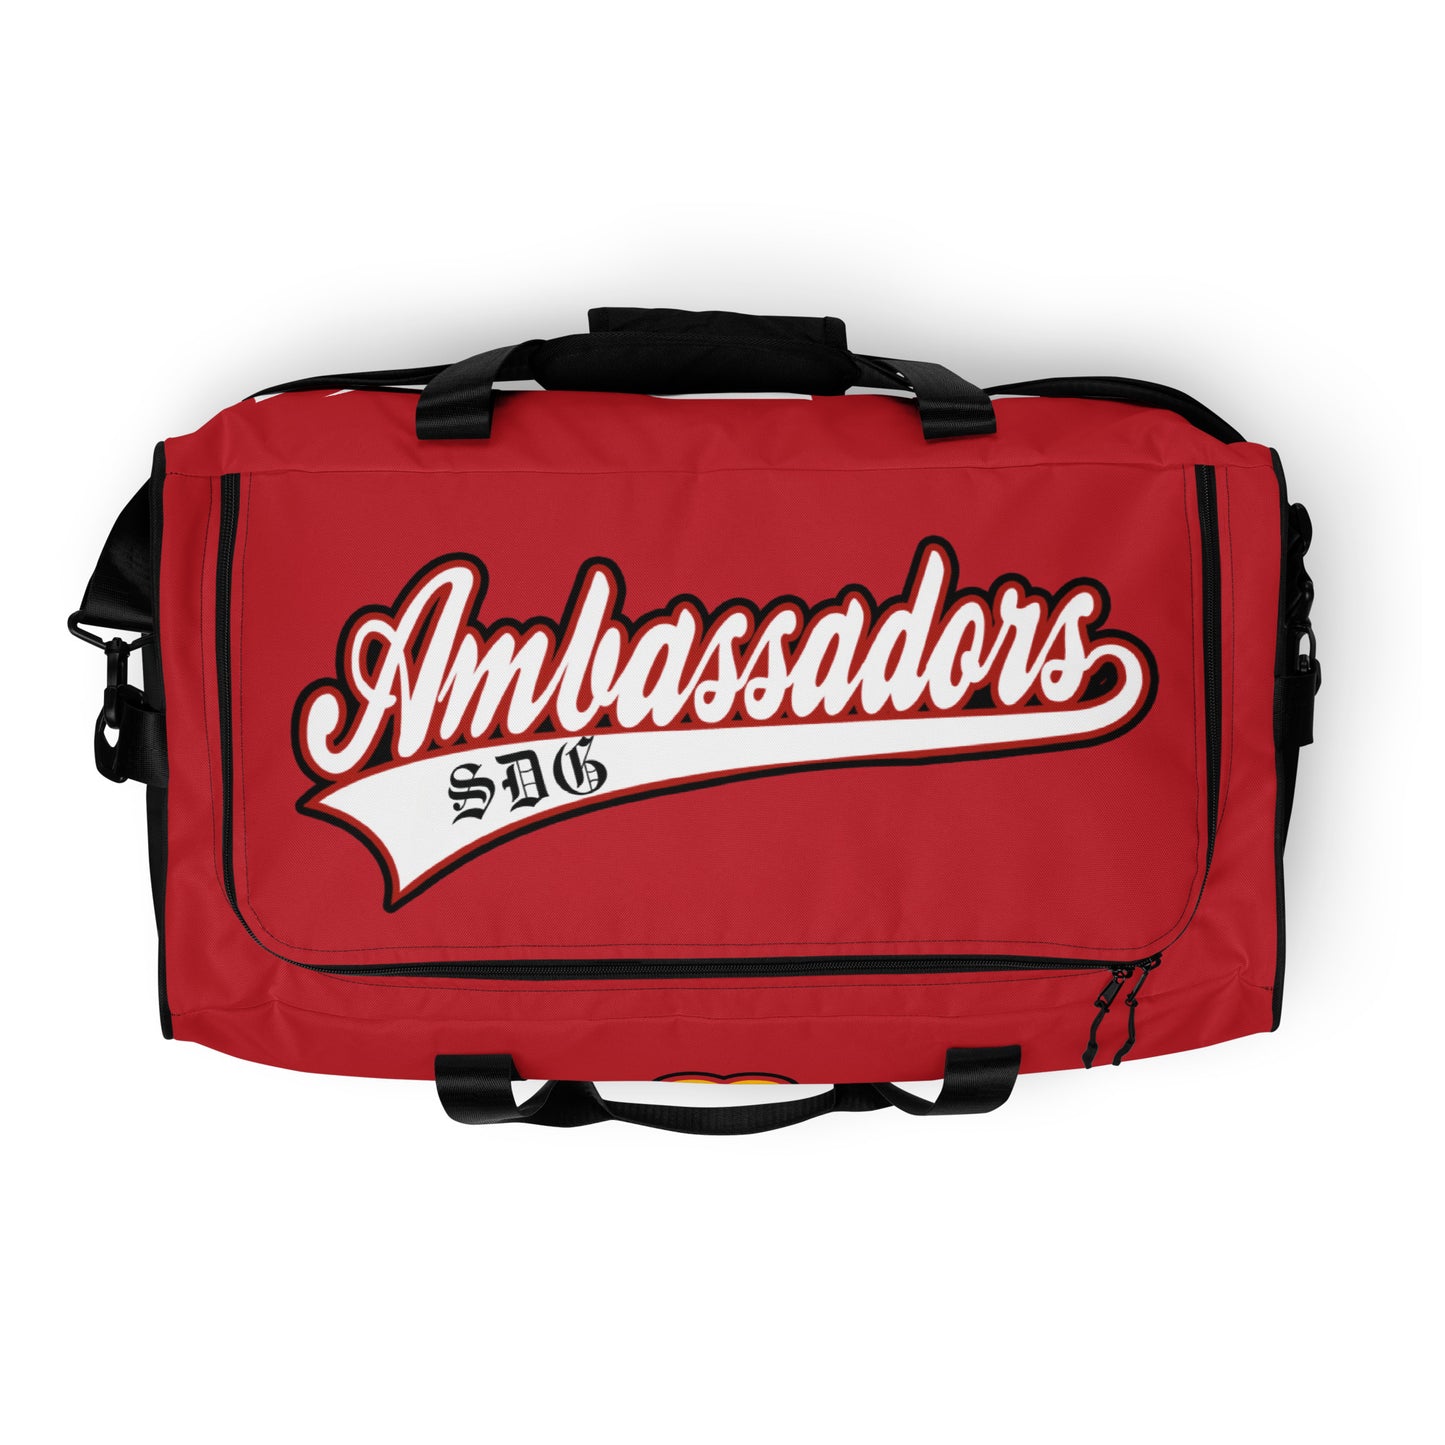 Ambassadors Duffle Bag